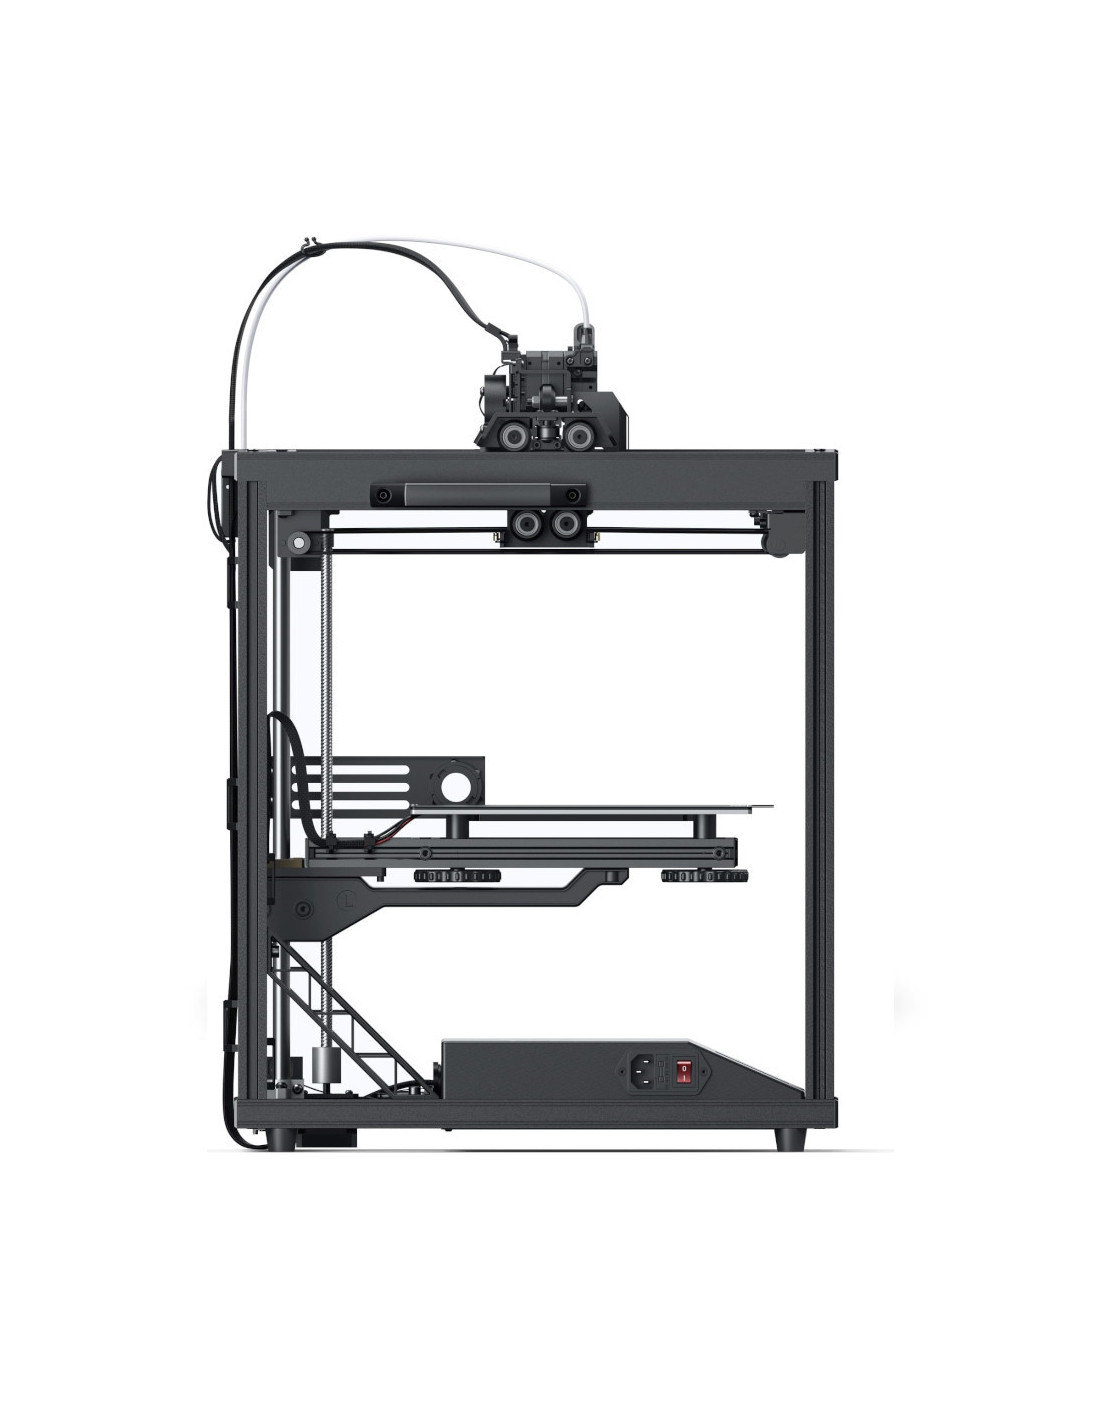 Creality Ender-5 S1 - 3D-printer